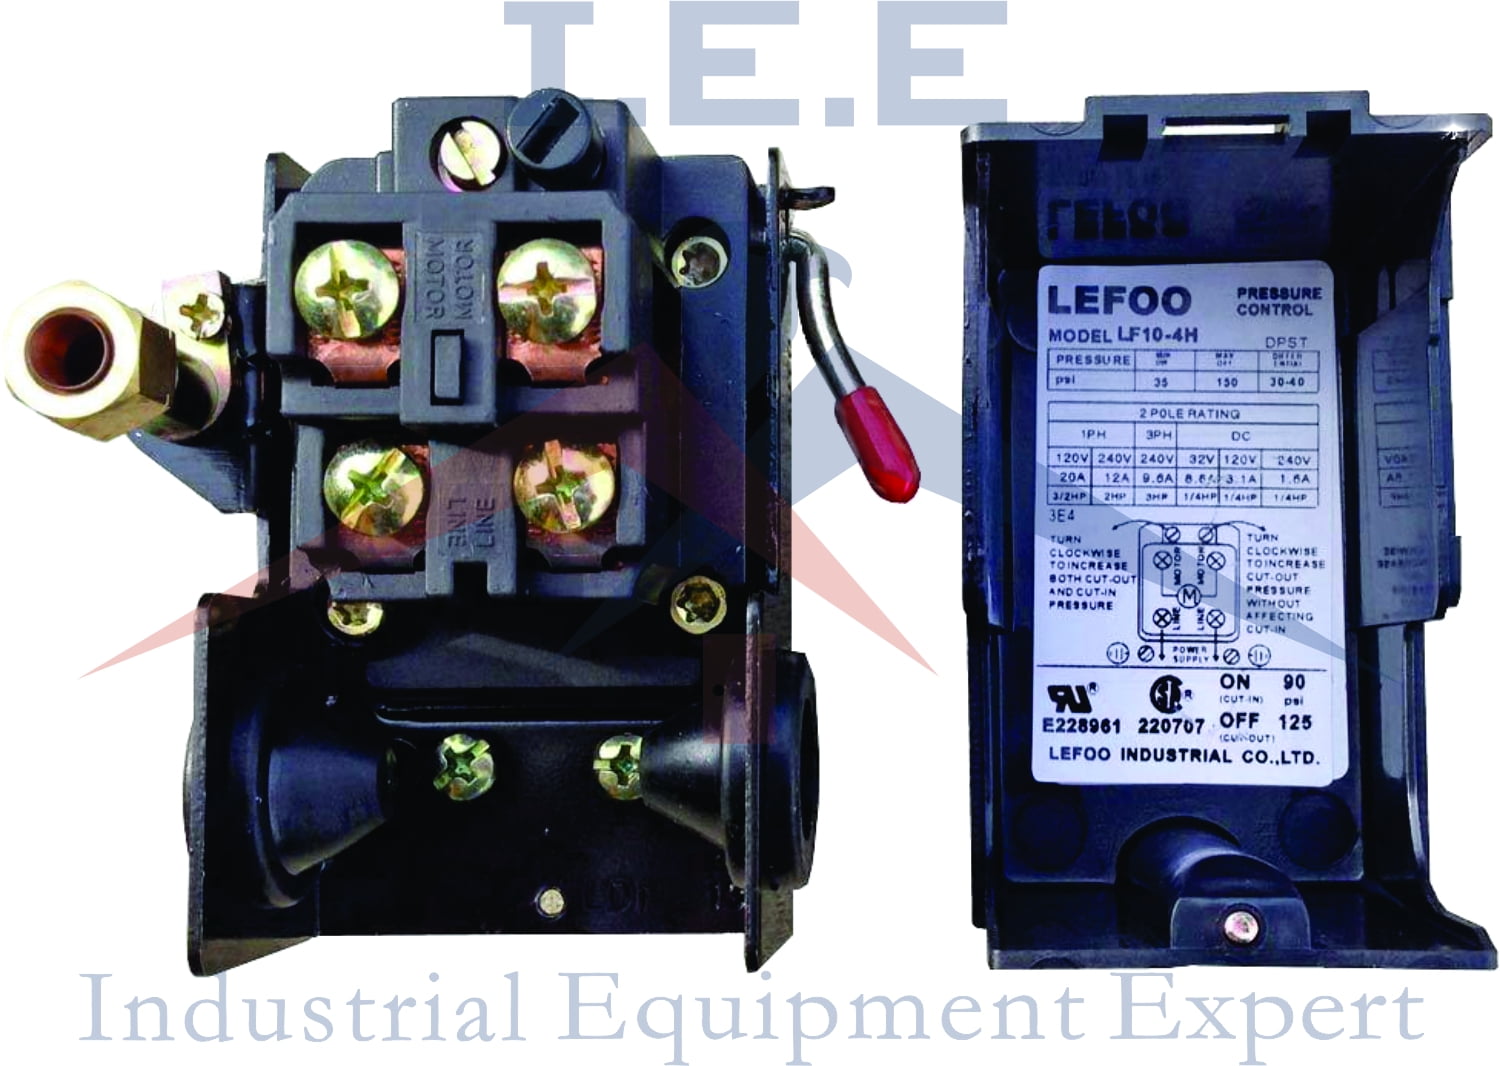 Lefoo Quality Pressure Control Switch Valve for Air Compressor 140-175psi 1 Port LF10-1H-1-NPT1/4-140-175 